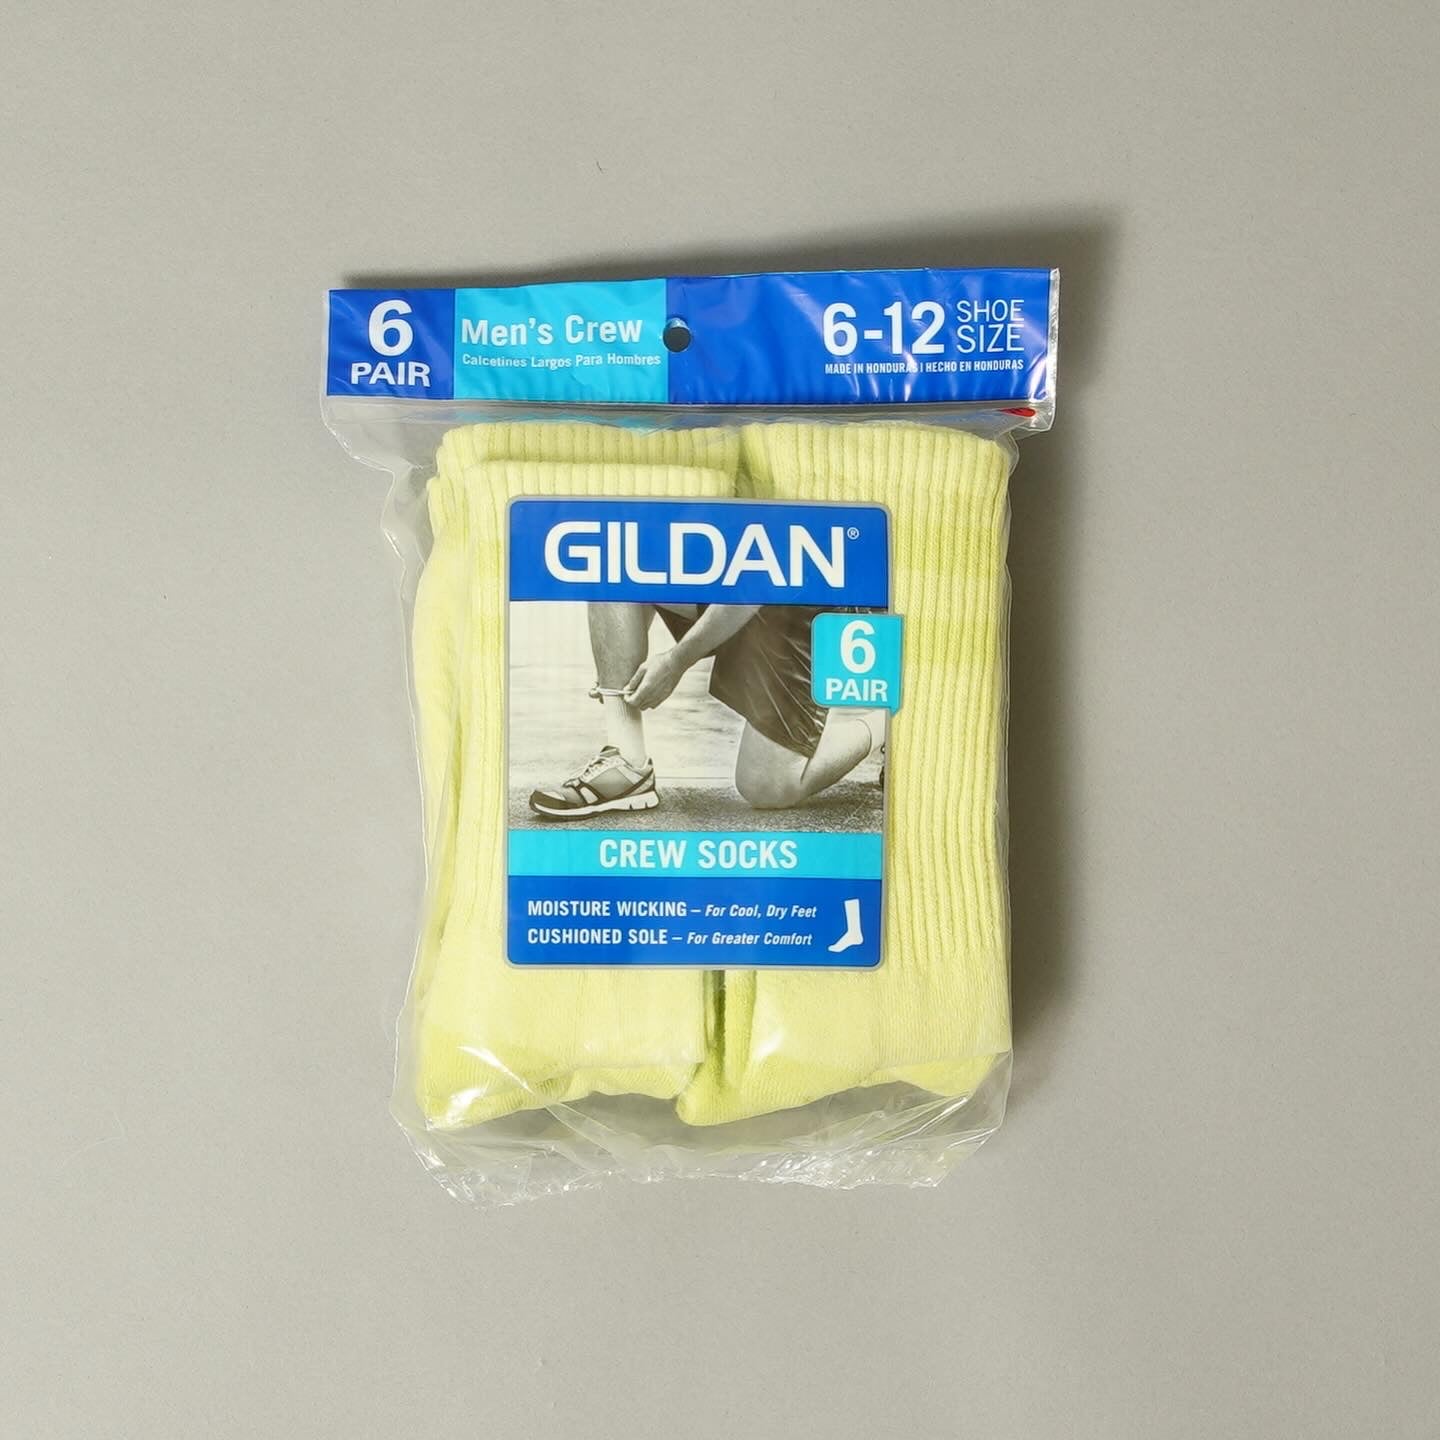 GILDAN 6P Crew Socks